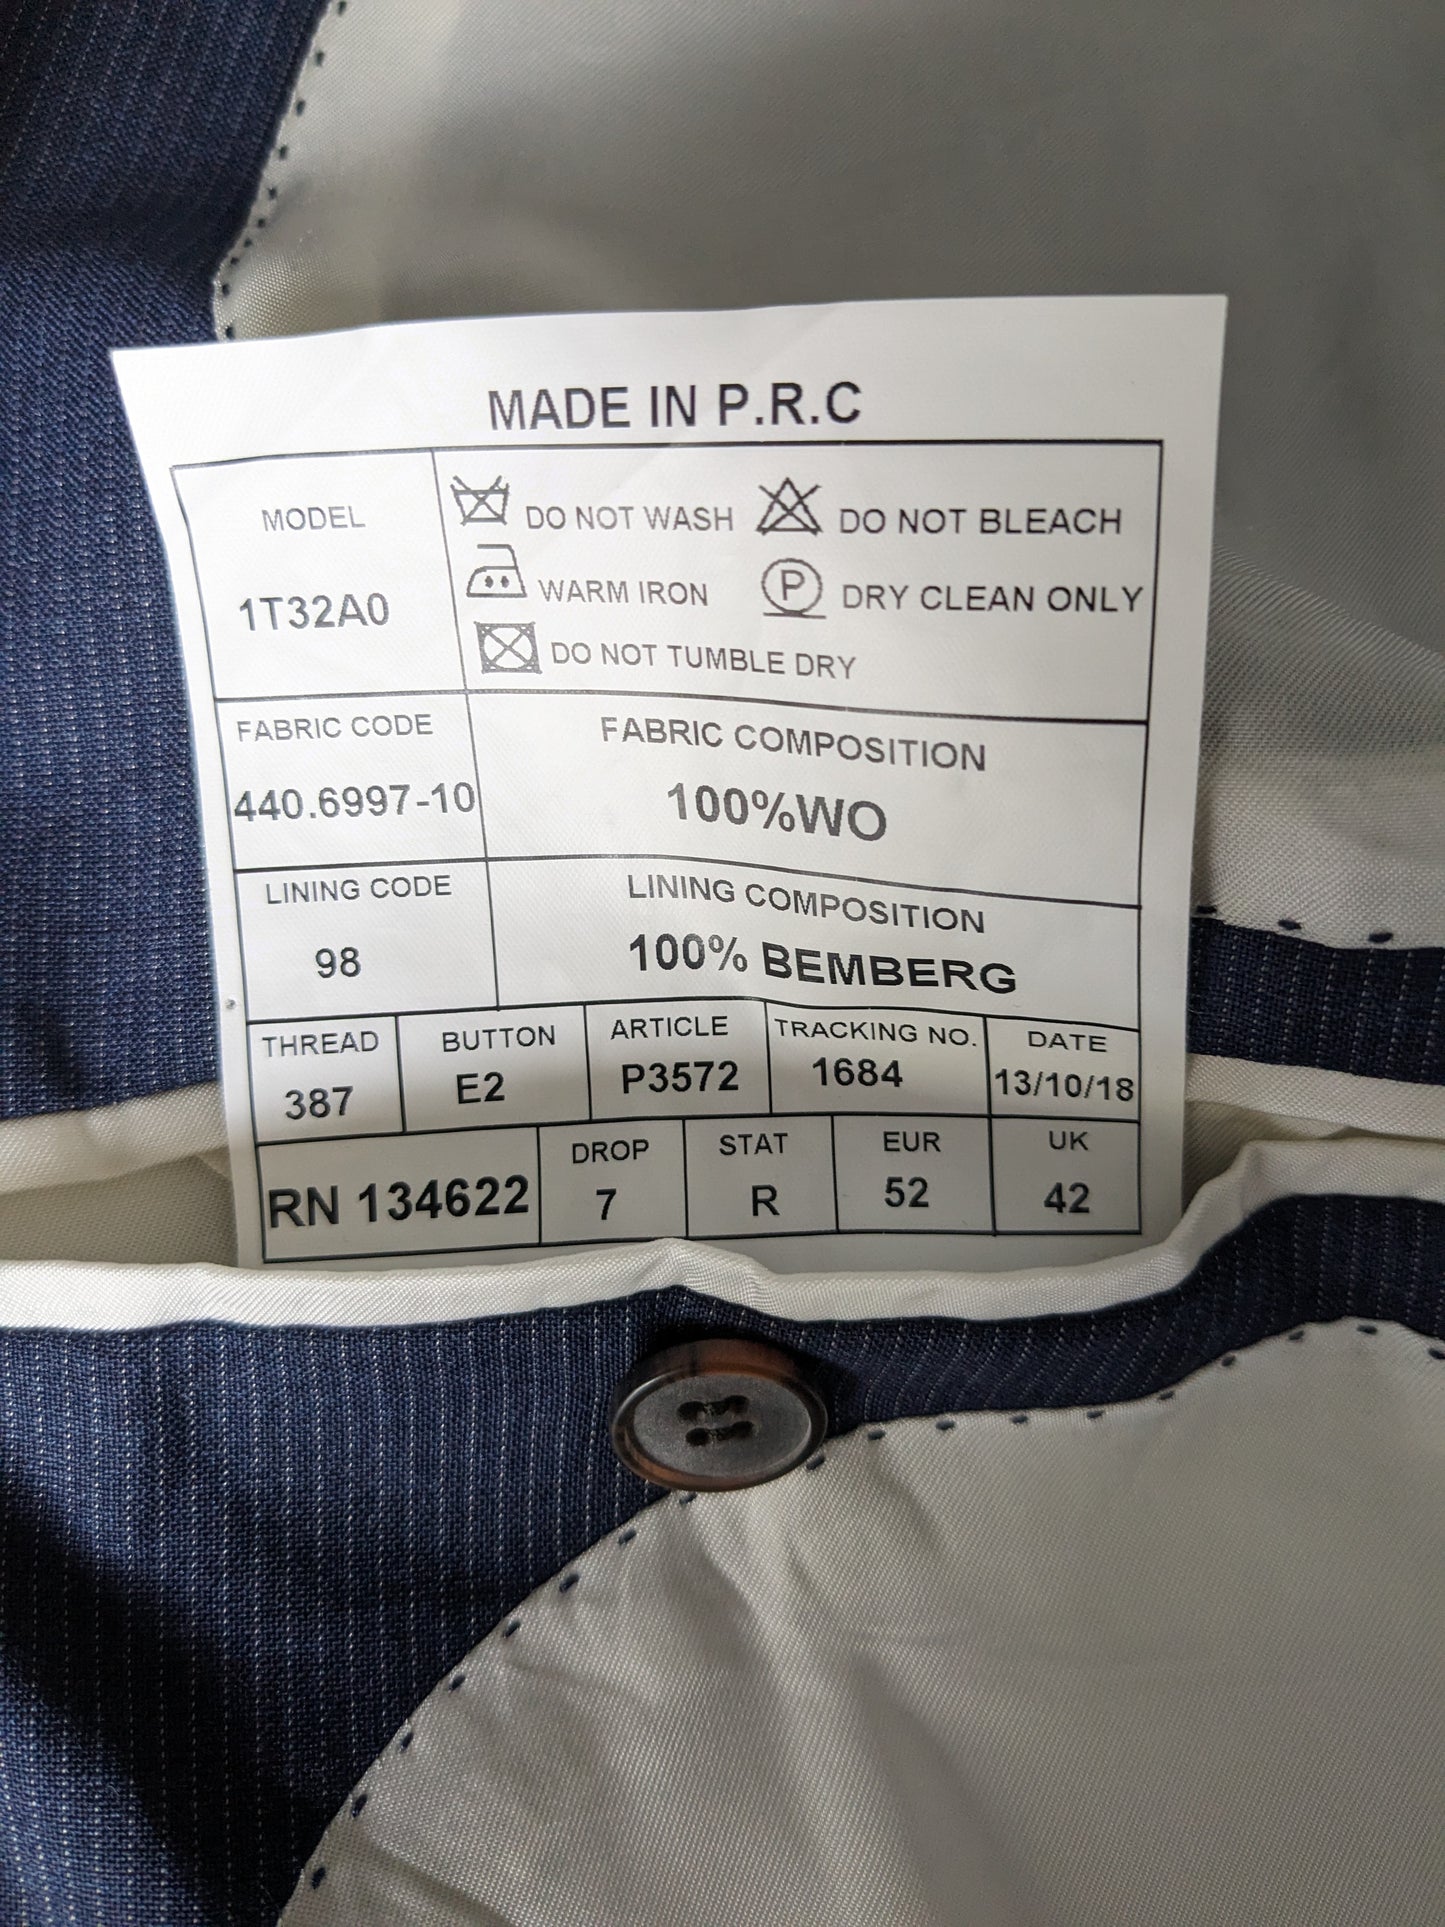 Suitsupply Super 120's Woolen Jacket. Blanco azul rayado. Tamaño 52 / L.